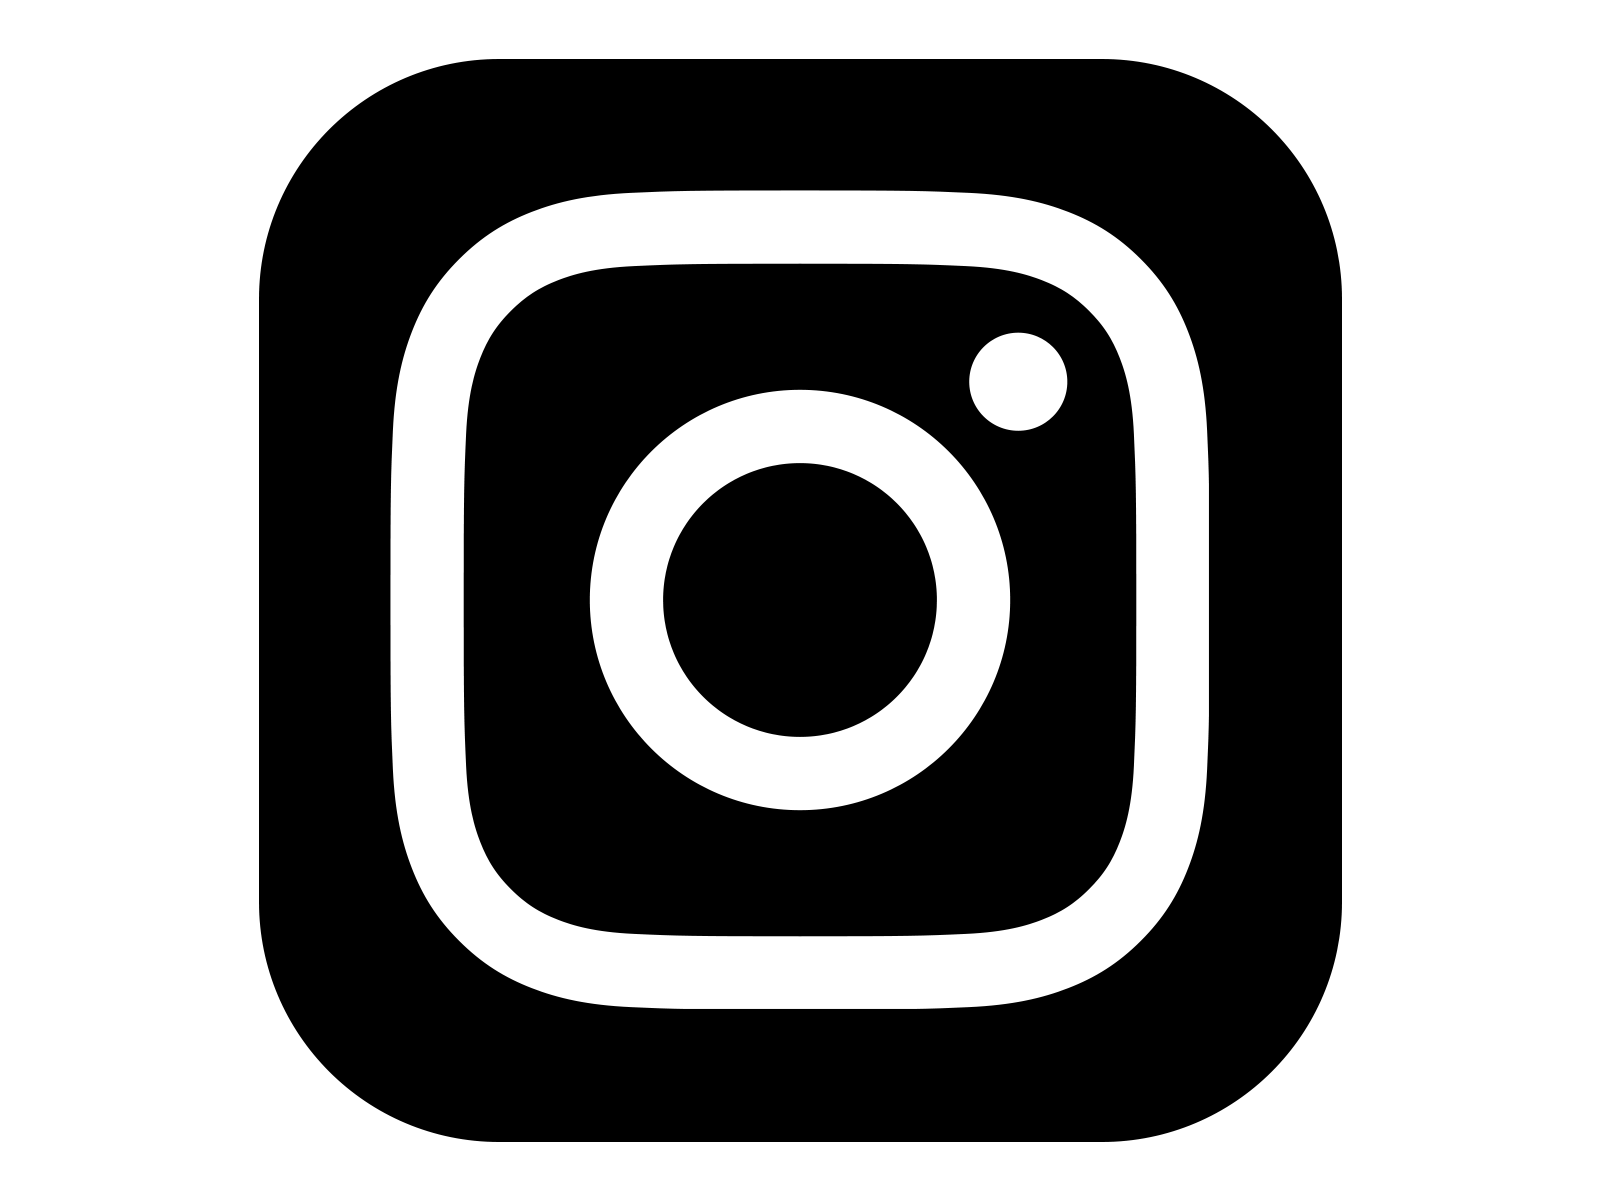 Download Logo ig PNG, Logo instagram Icon Free DOWNLOAD - Free ...